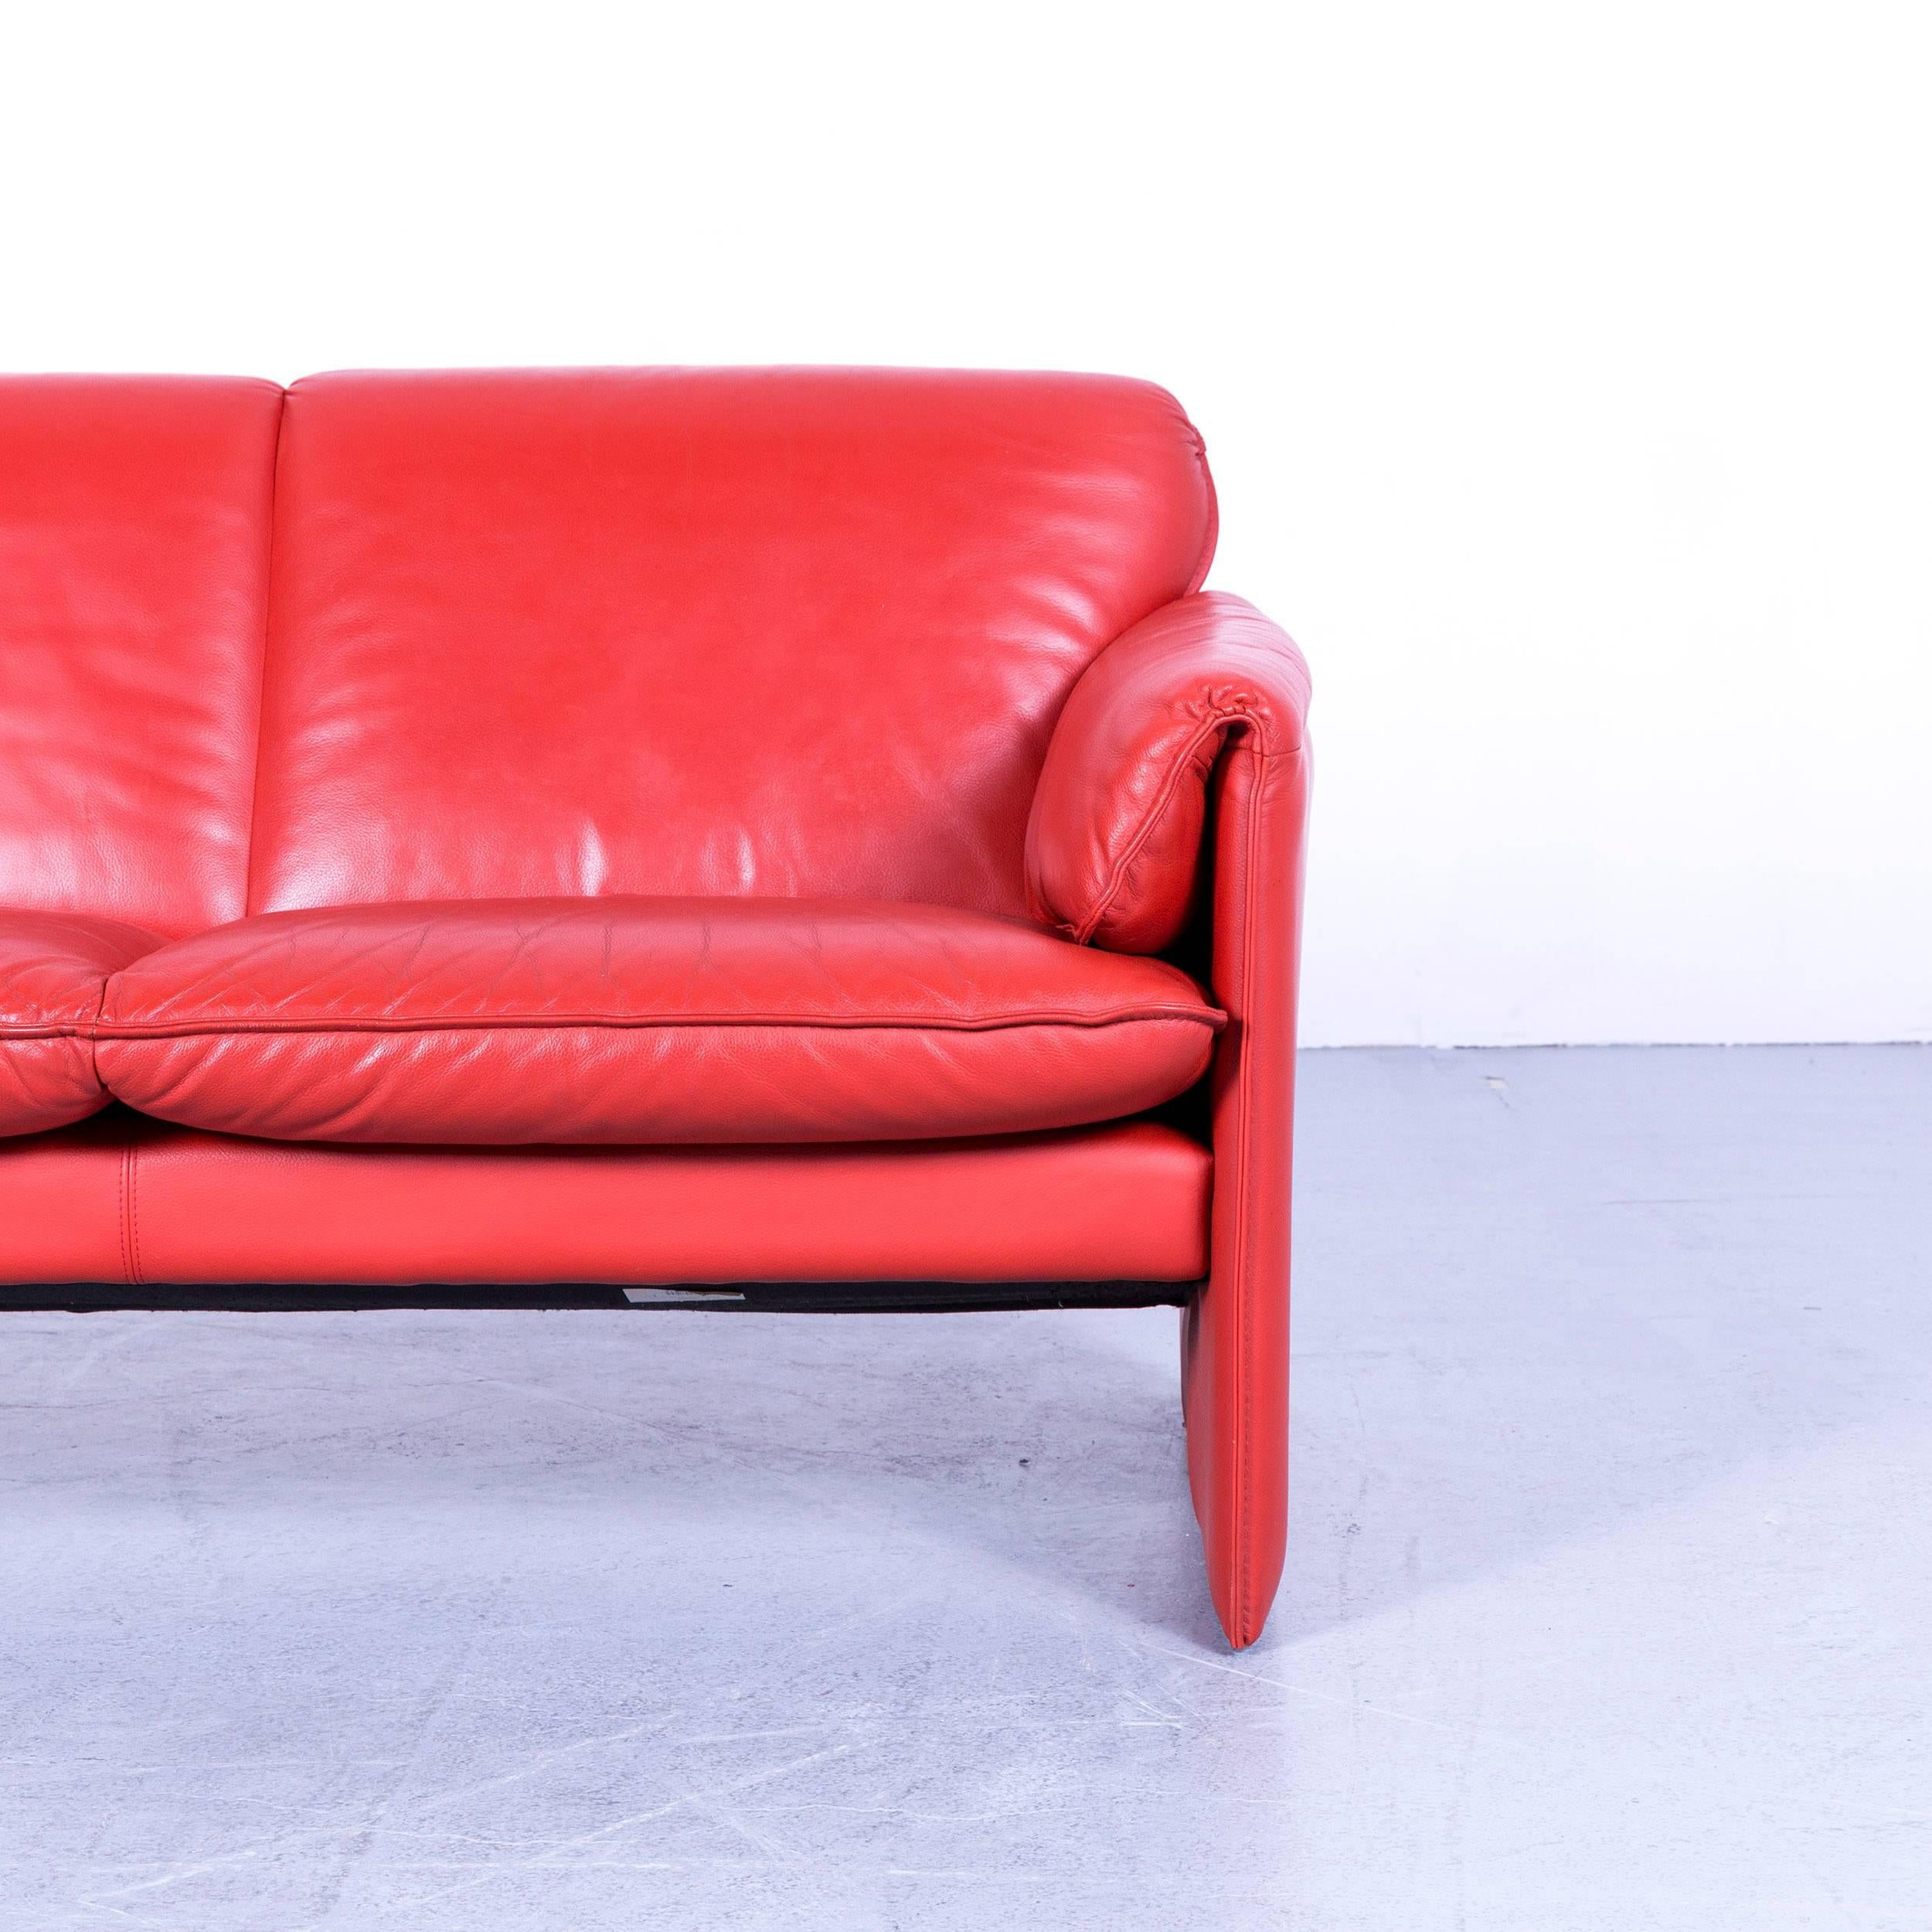 Leolux Bora Designer Sofa Leather Orange Red Two-Seat Couch Modern In Good Condition For Sale In Cologne, DE